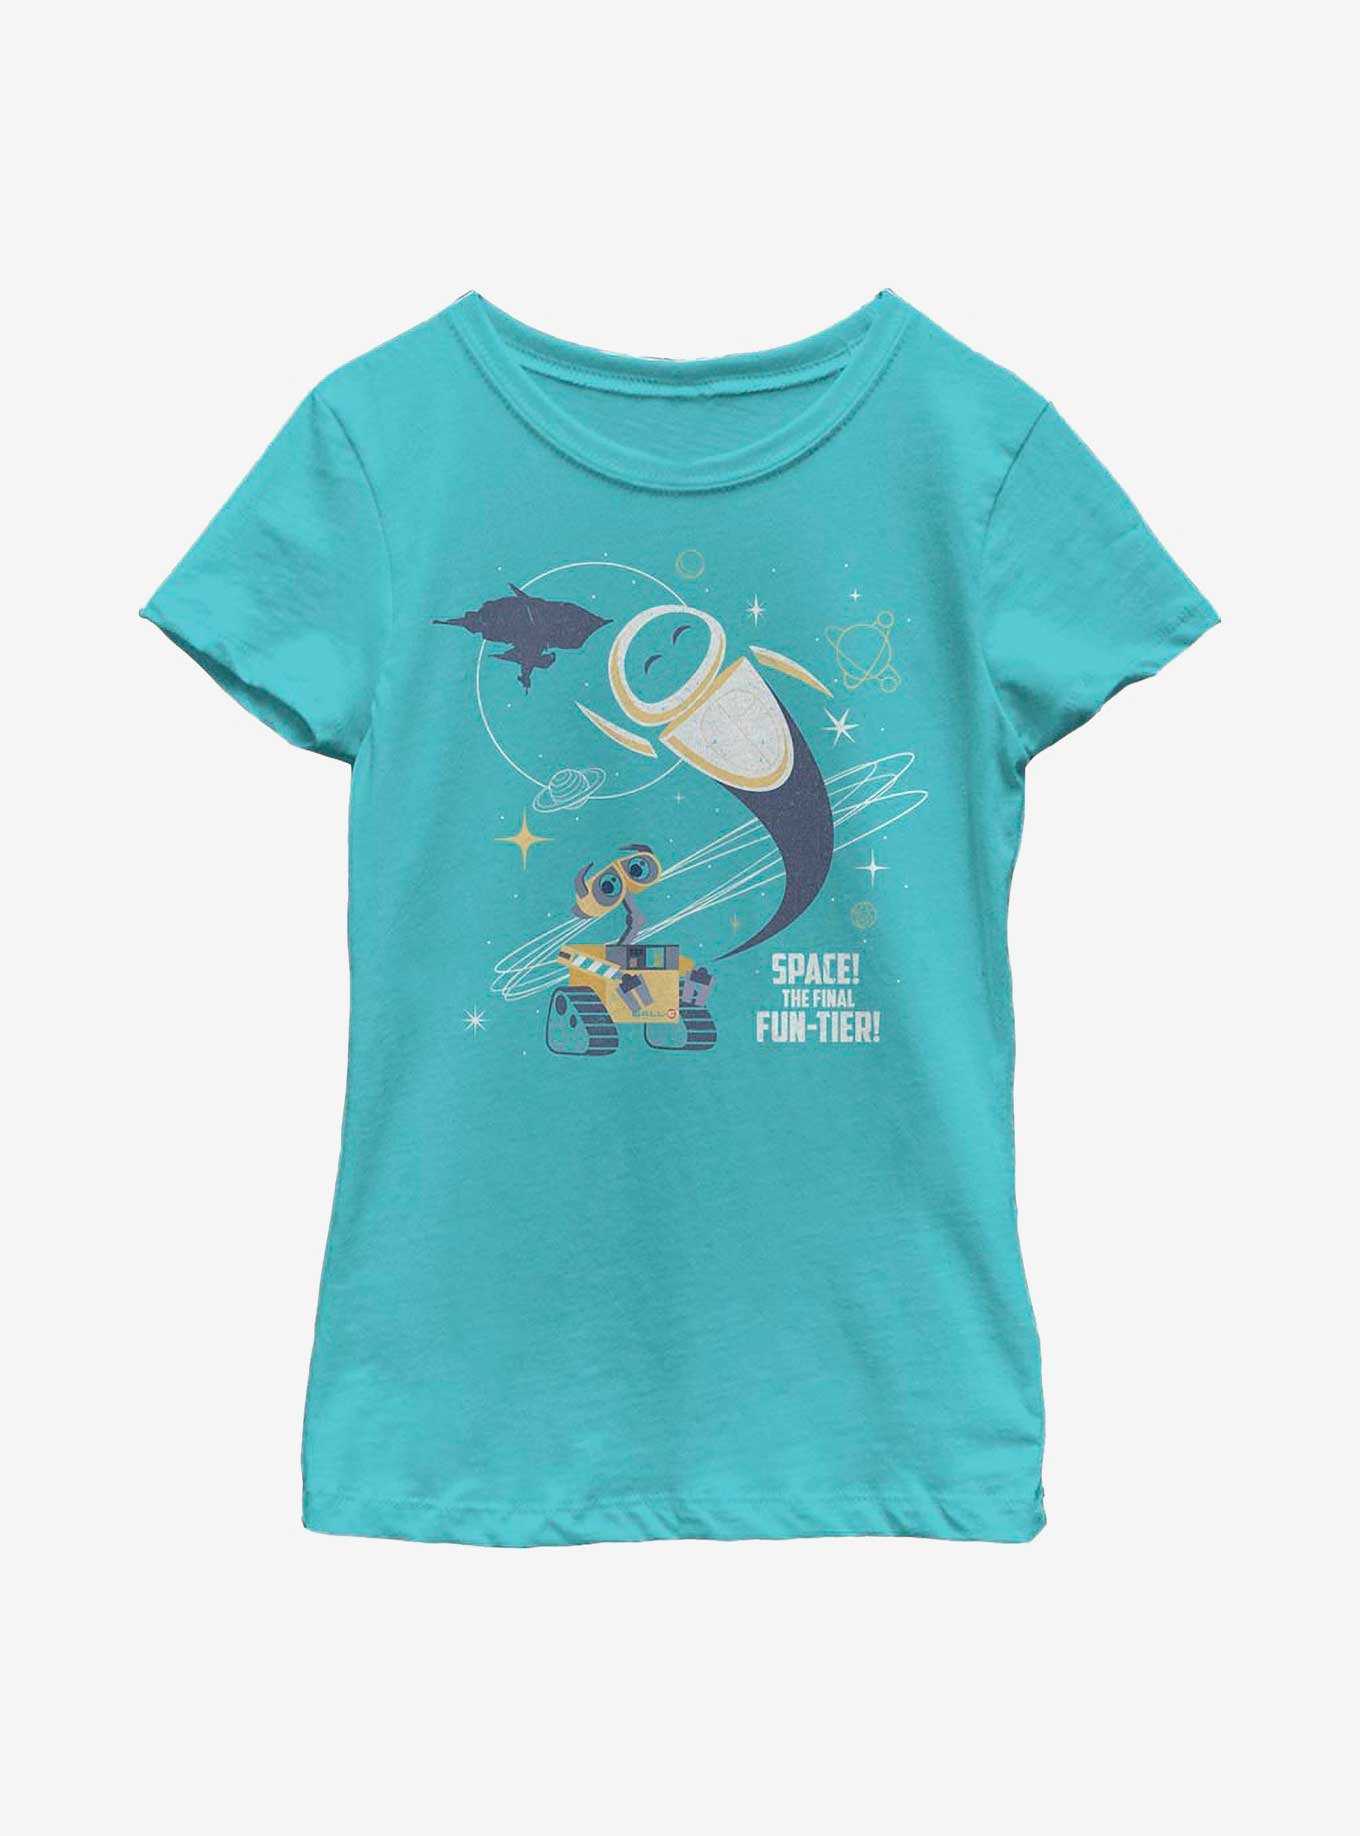 Disney Pixar WALL-E Retro Space Funtier Youth Girls T-Shirt, , hi-res